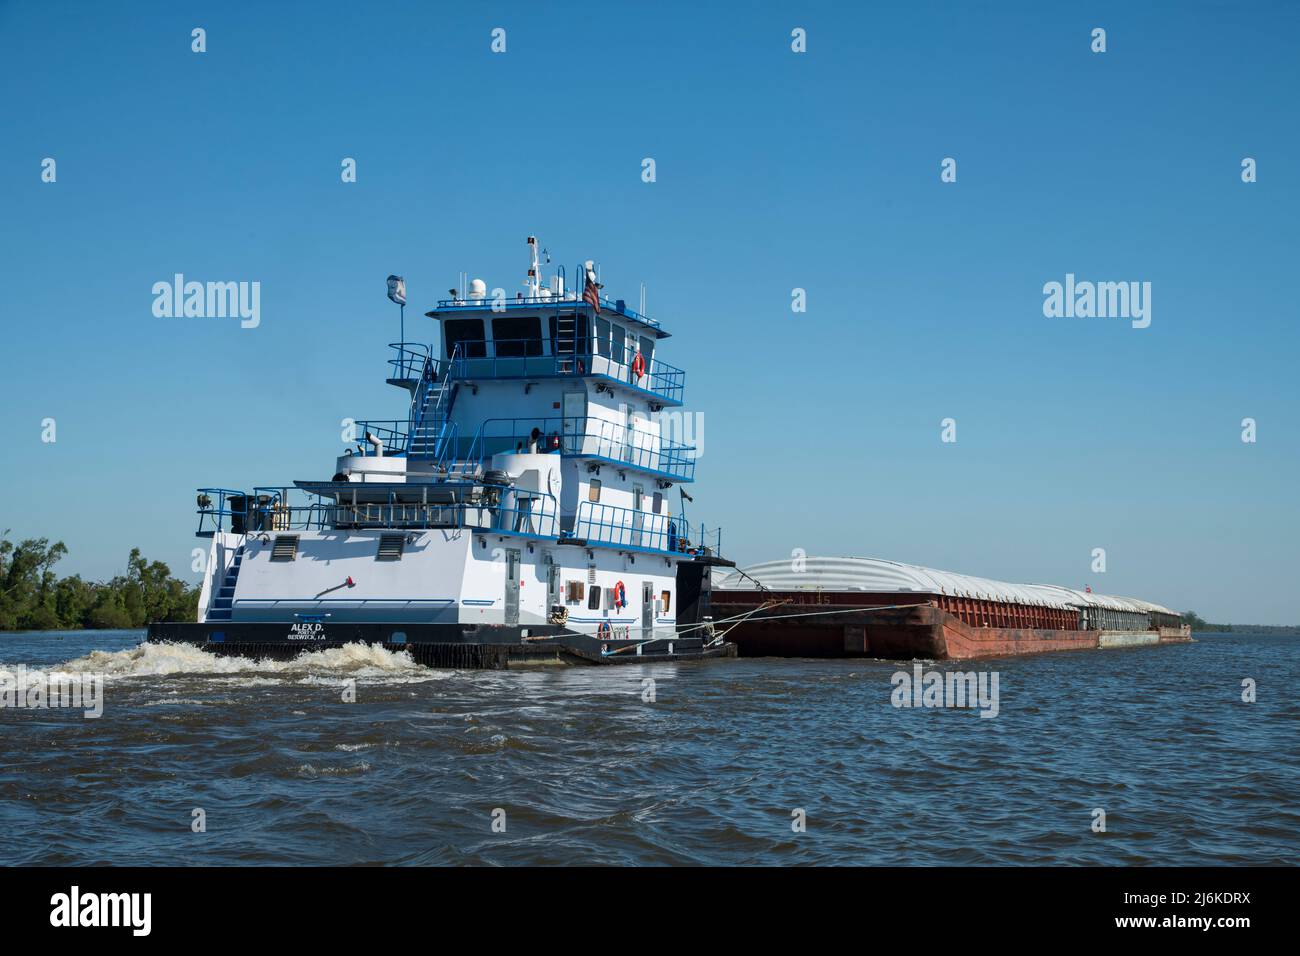 USA, South, Louisiana, Houma, Intercoastal Waterway, barge Stock Photo